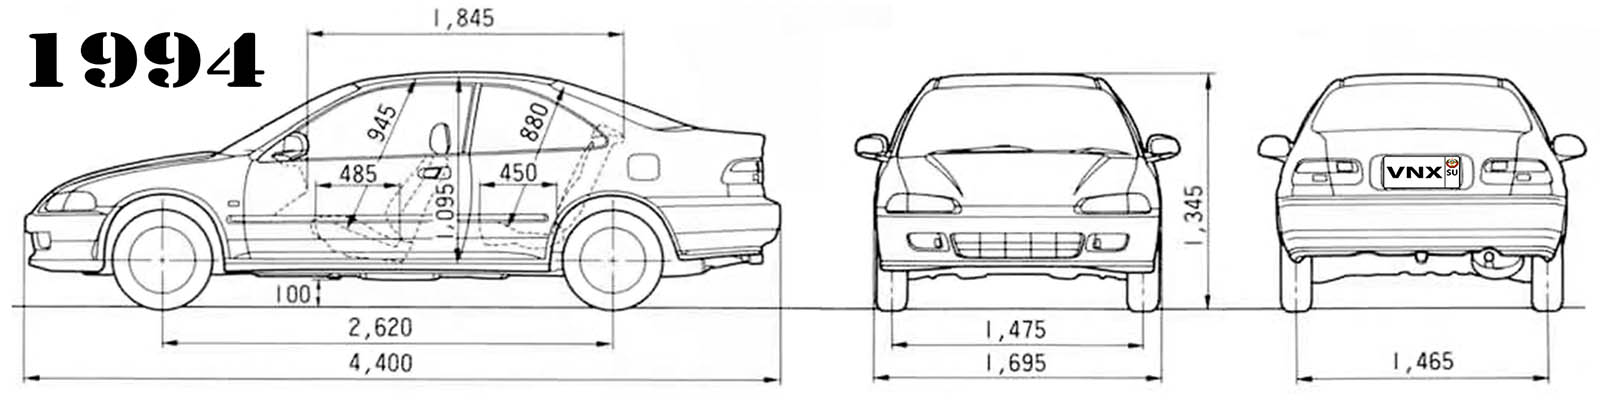 Габаритные размеры Хонда Сивик купе 1994 (dimensions Honda Civic COUPE EJ1/EJ2)